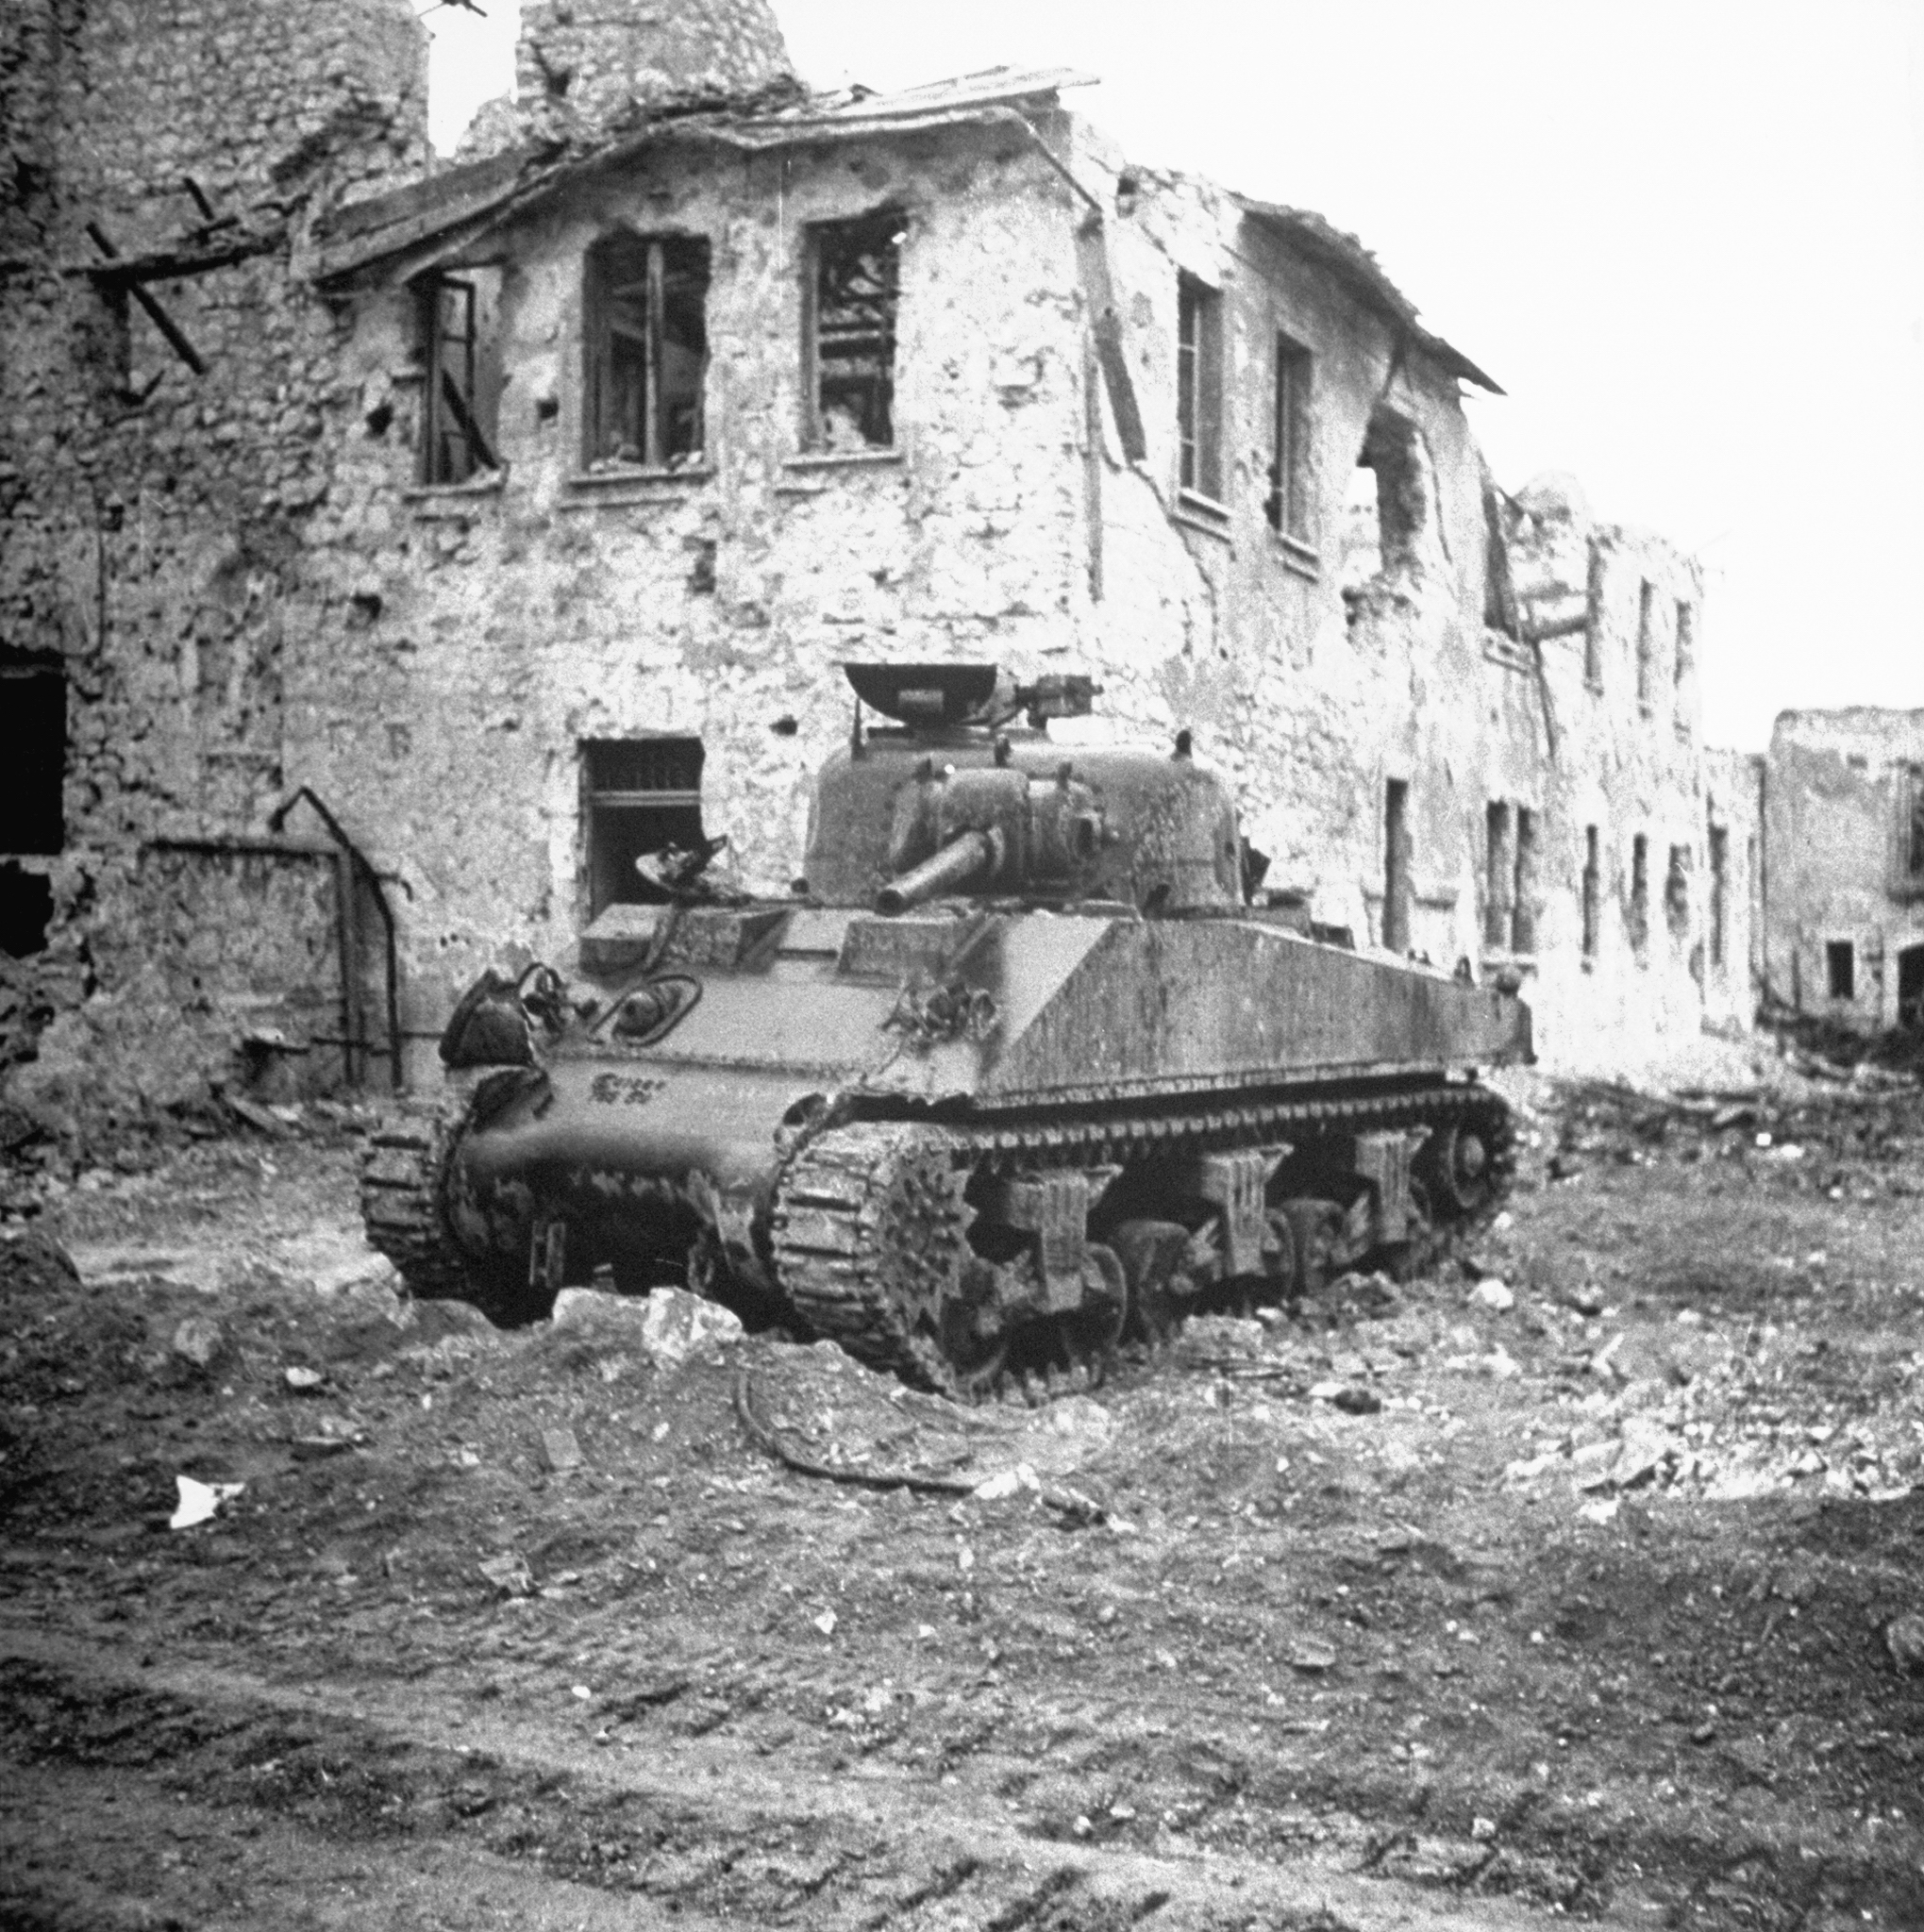 Disabled American M4 Sherman tank near Cassino, Italy, 1944.